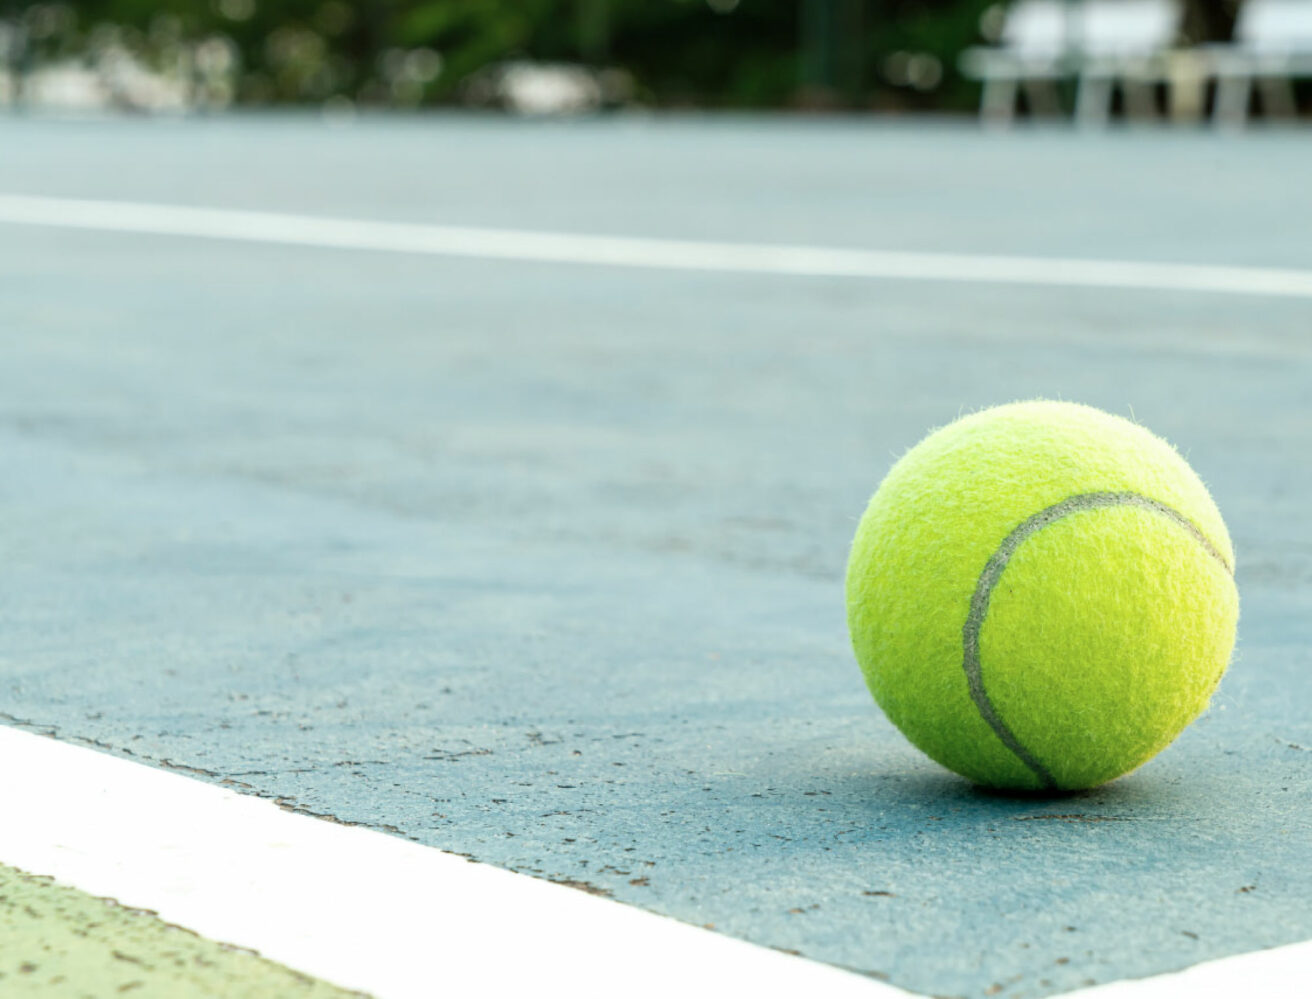 Теннисный мяч на корте. Два теннисных мяча на столе. Блуд и теннисный мяч. Теннисные мячи юмор.